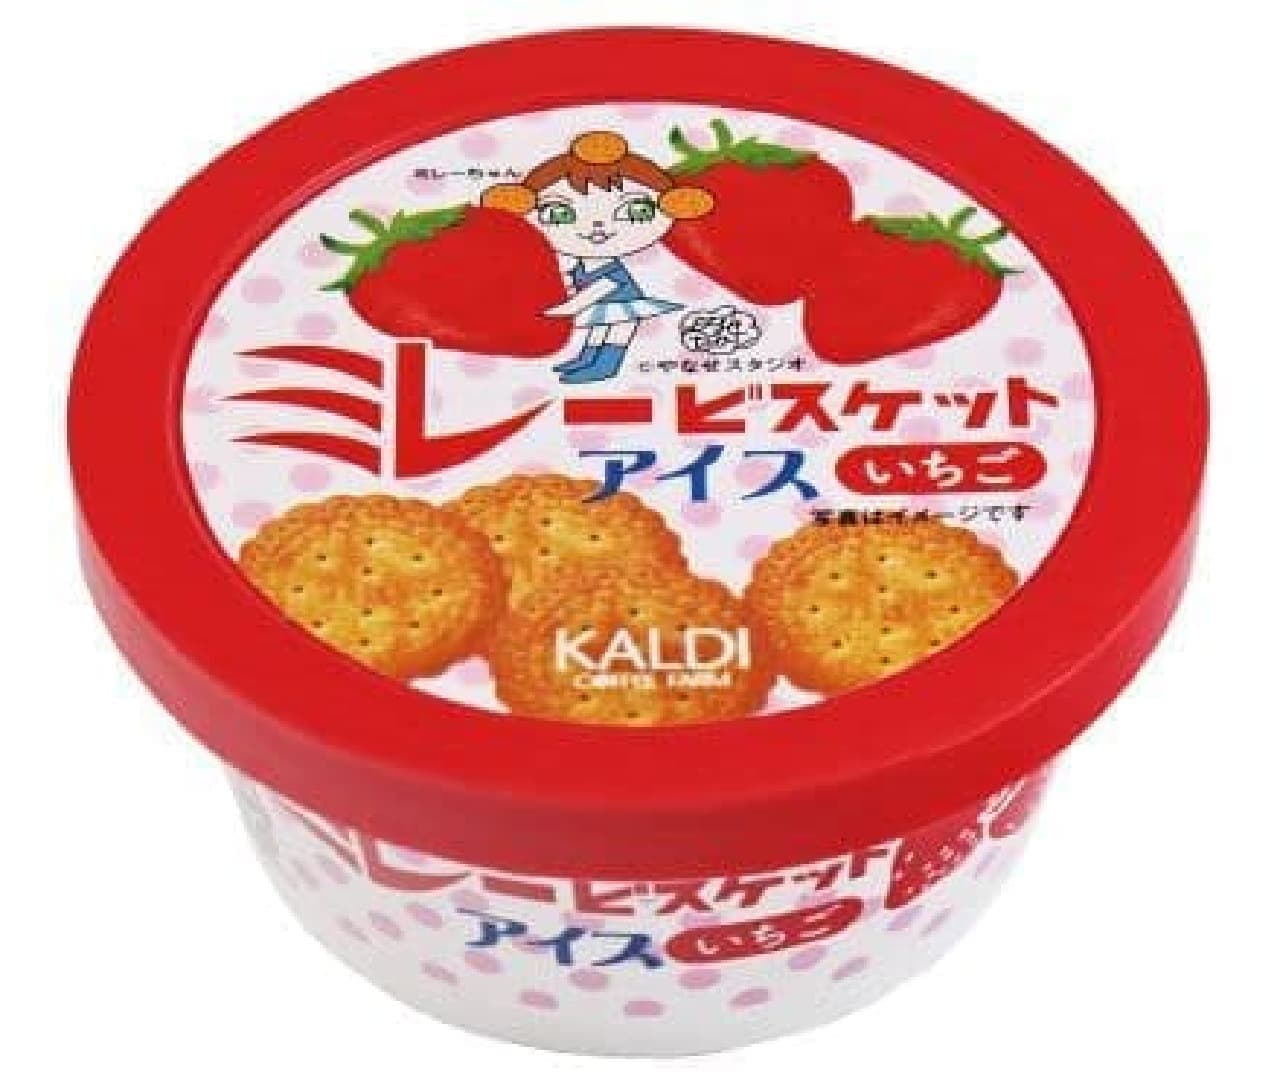 KALDI "Original Millet Biscuit Ice Cream Strawberry